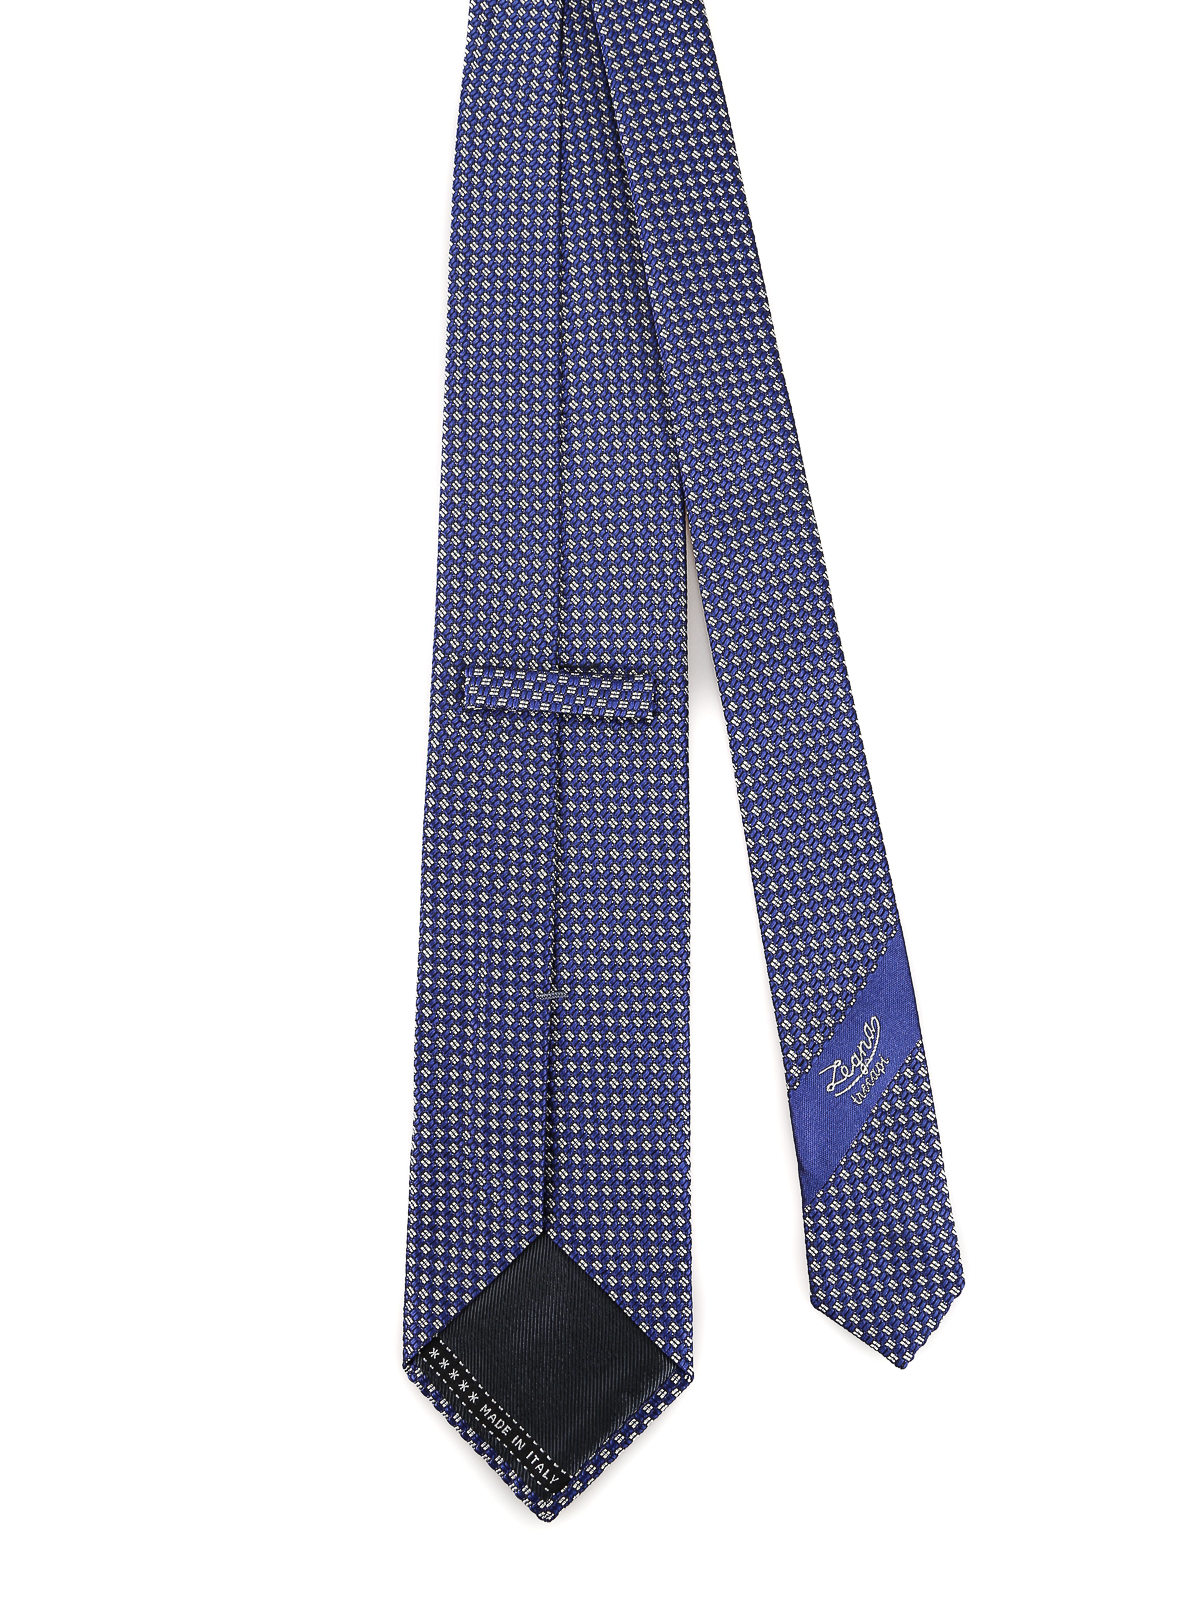 Ermenegildo Zegna Andere materialien krawatte in Blau für Herren Herren Accessoires Krawatten 